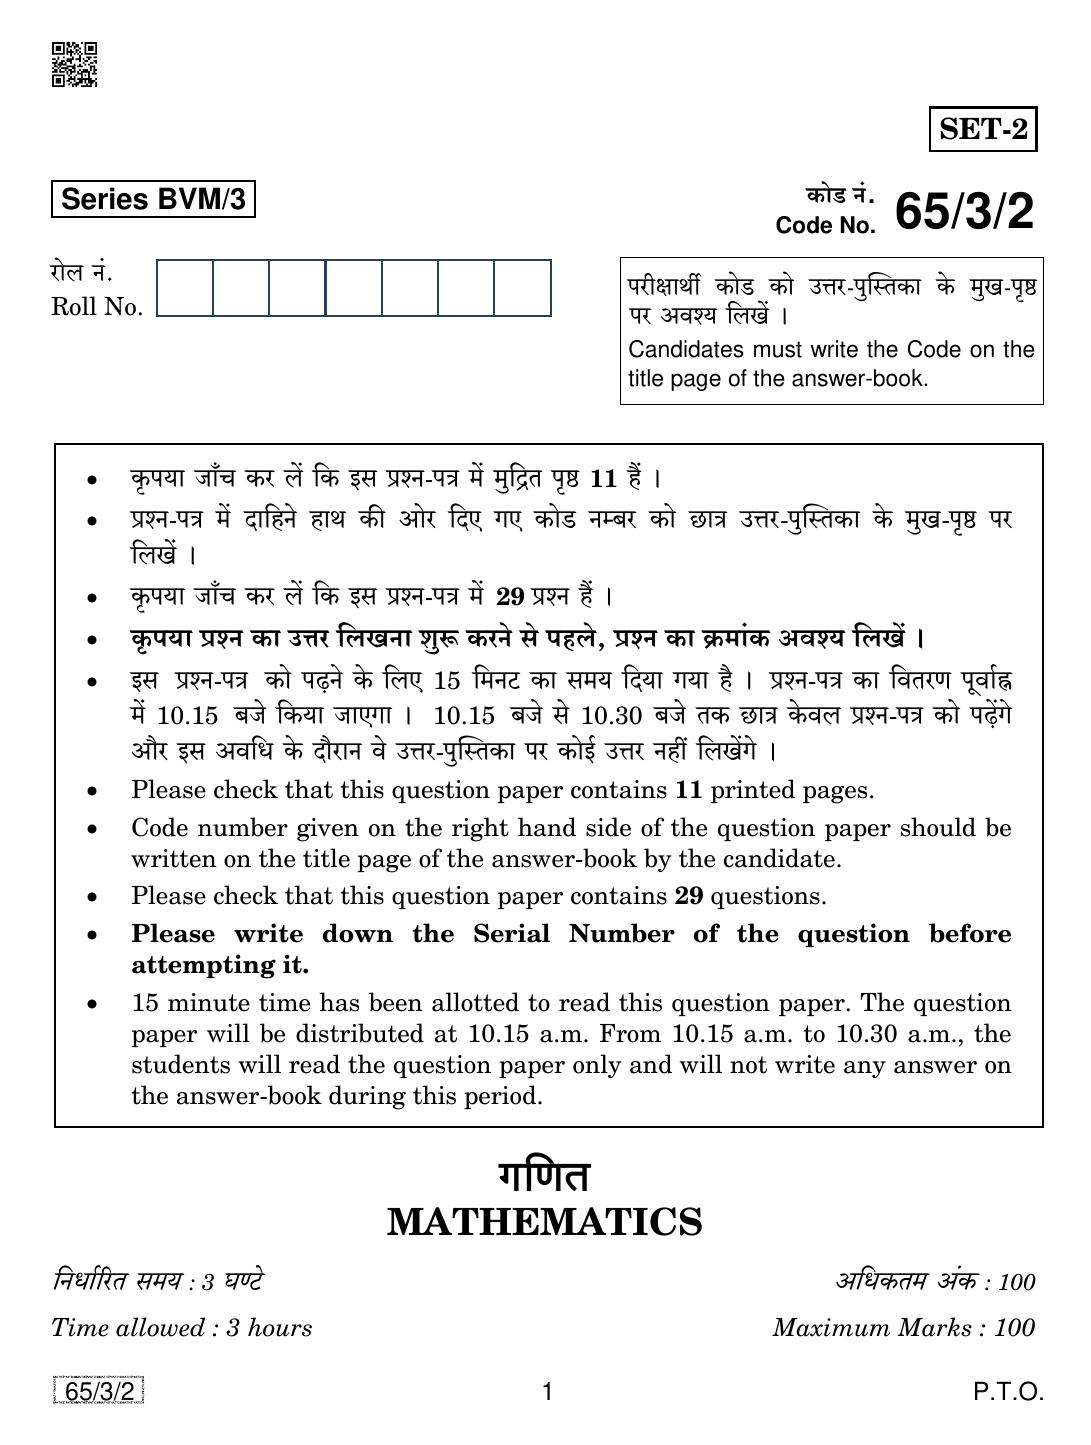 CBSE Class 12 65-3-2 Mathematics 2019 Question Paper - Page 1